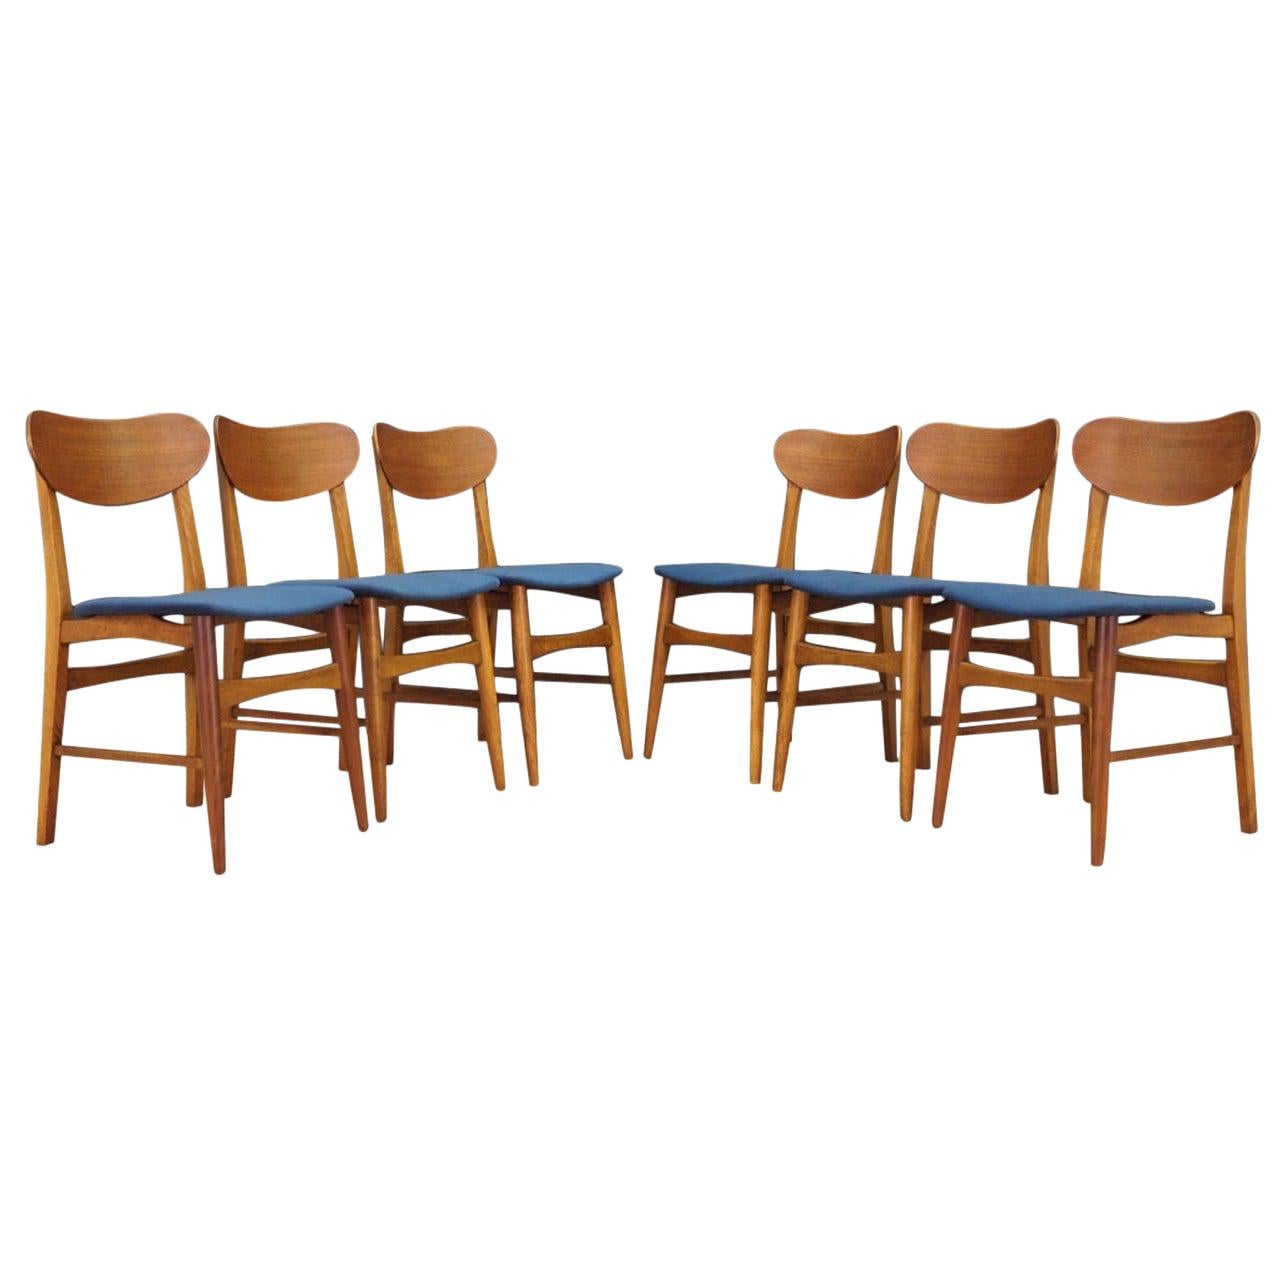 Blue Teak Chairs Vintage Danish Design, 1960s